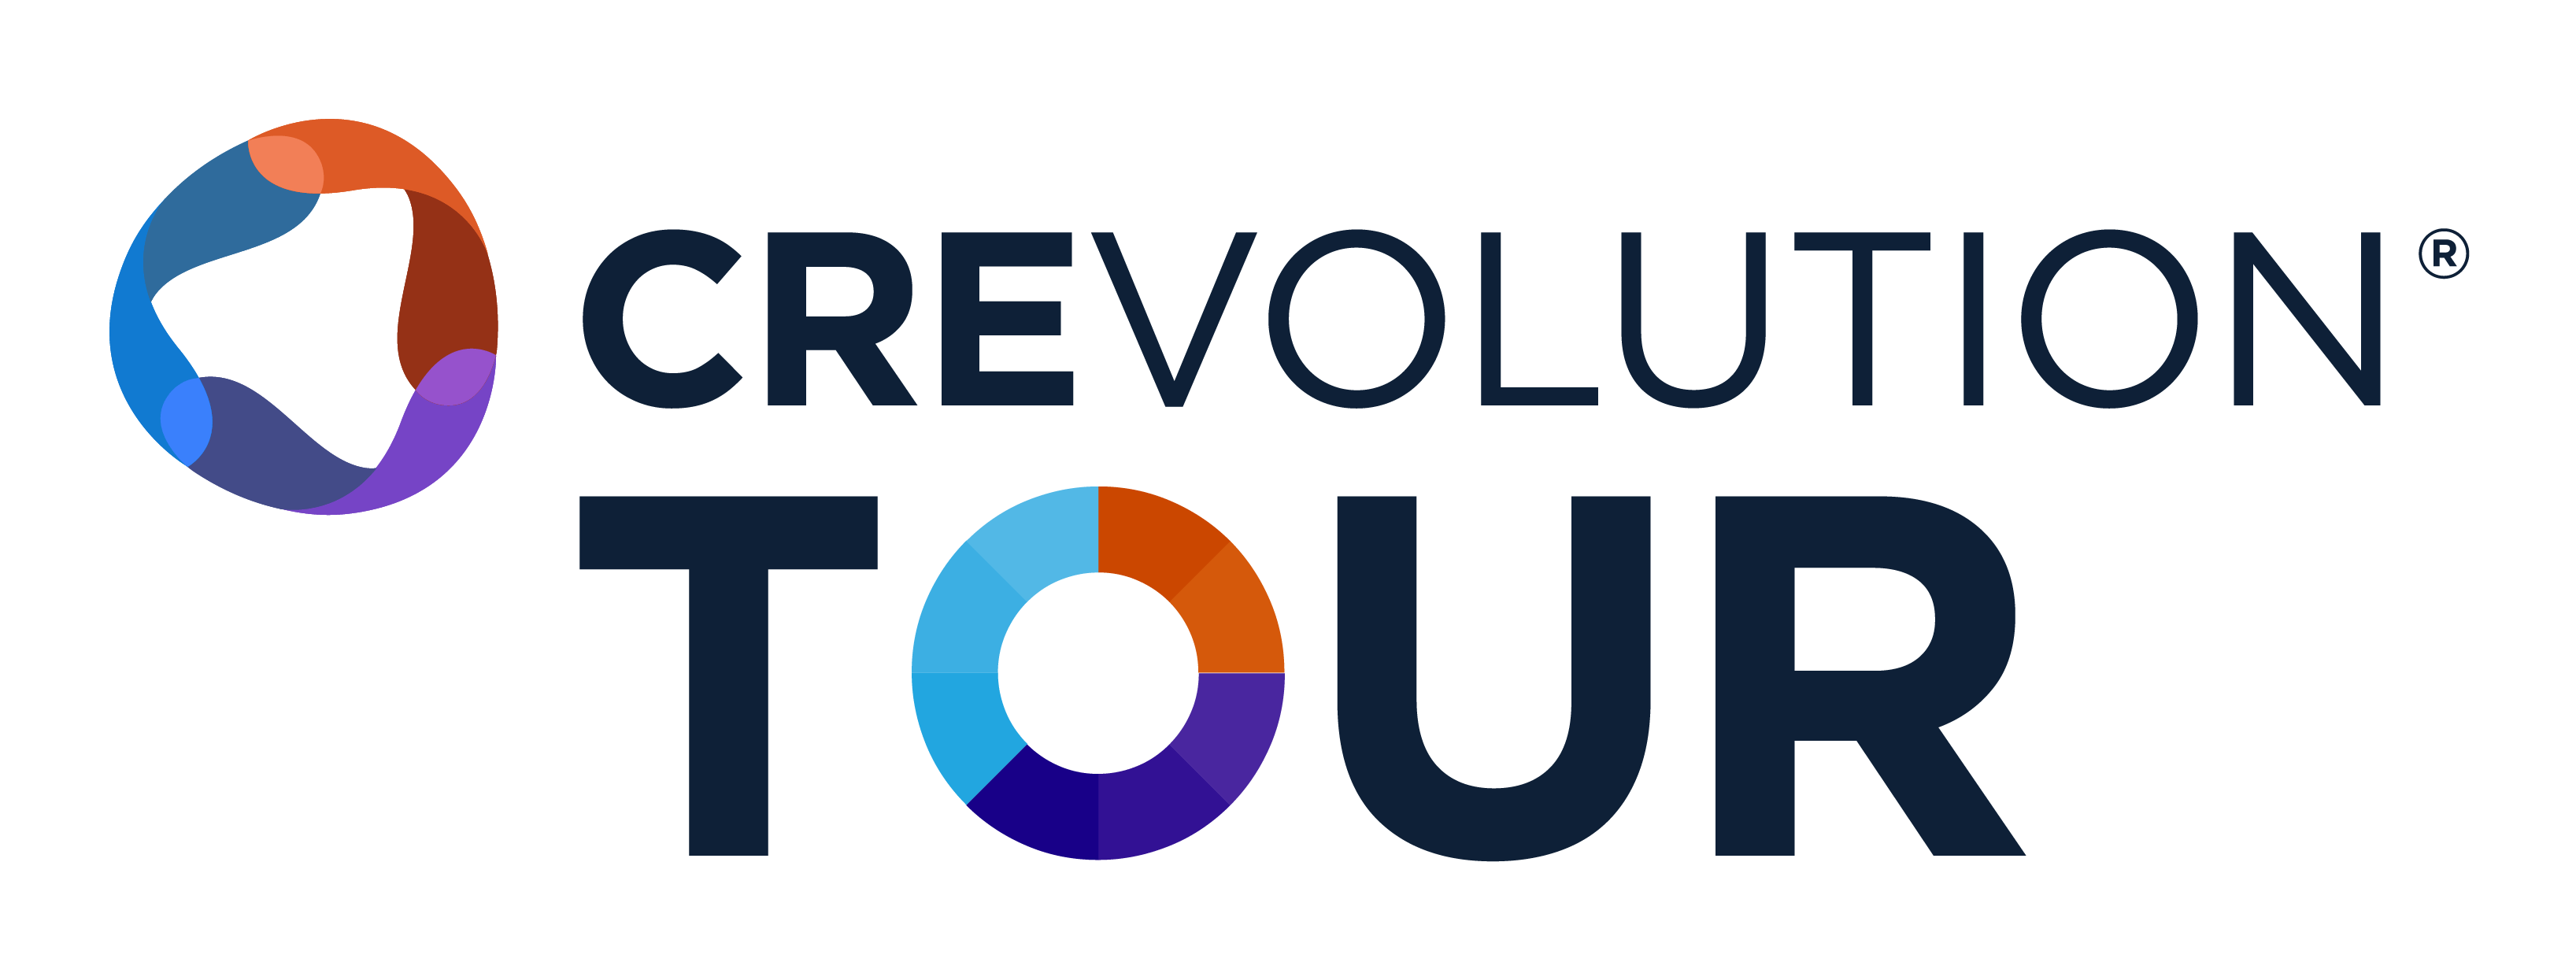 Crevolution-TOUR